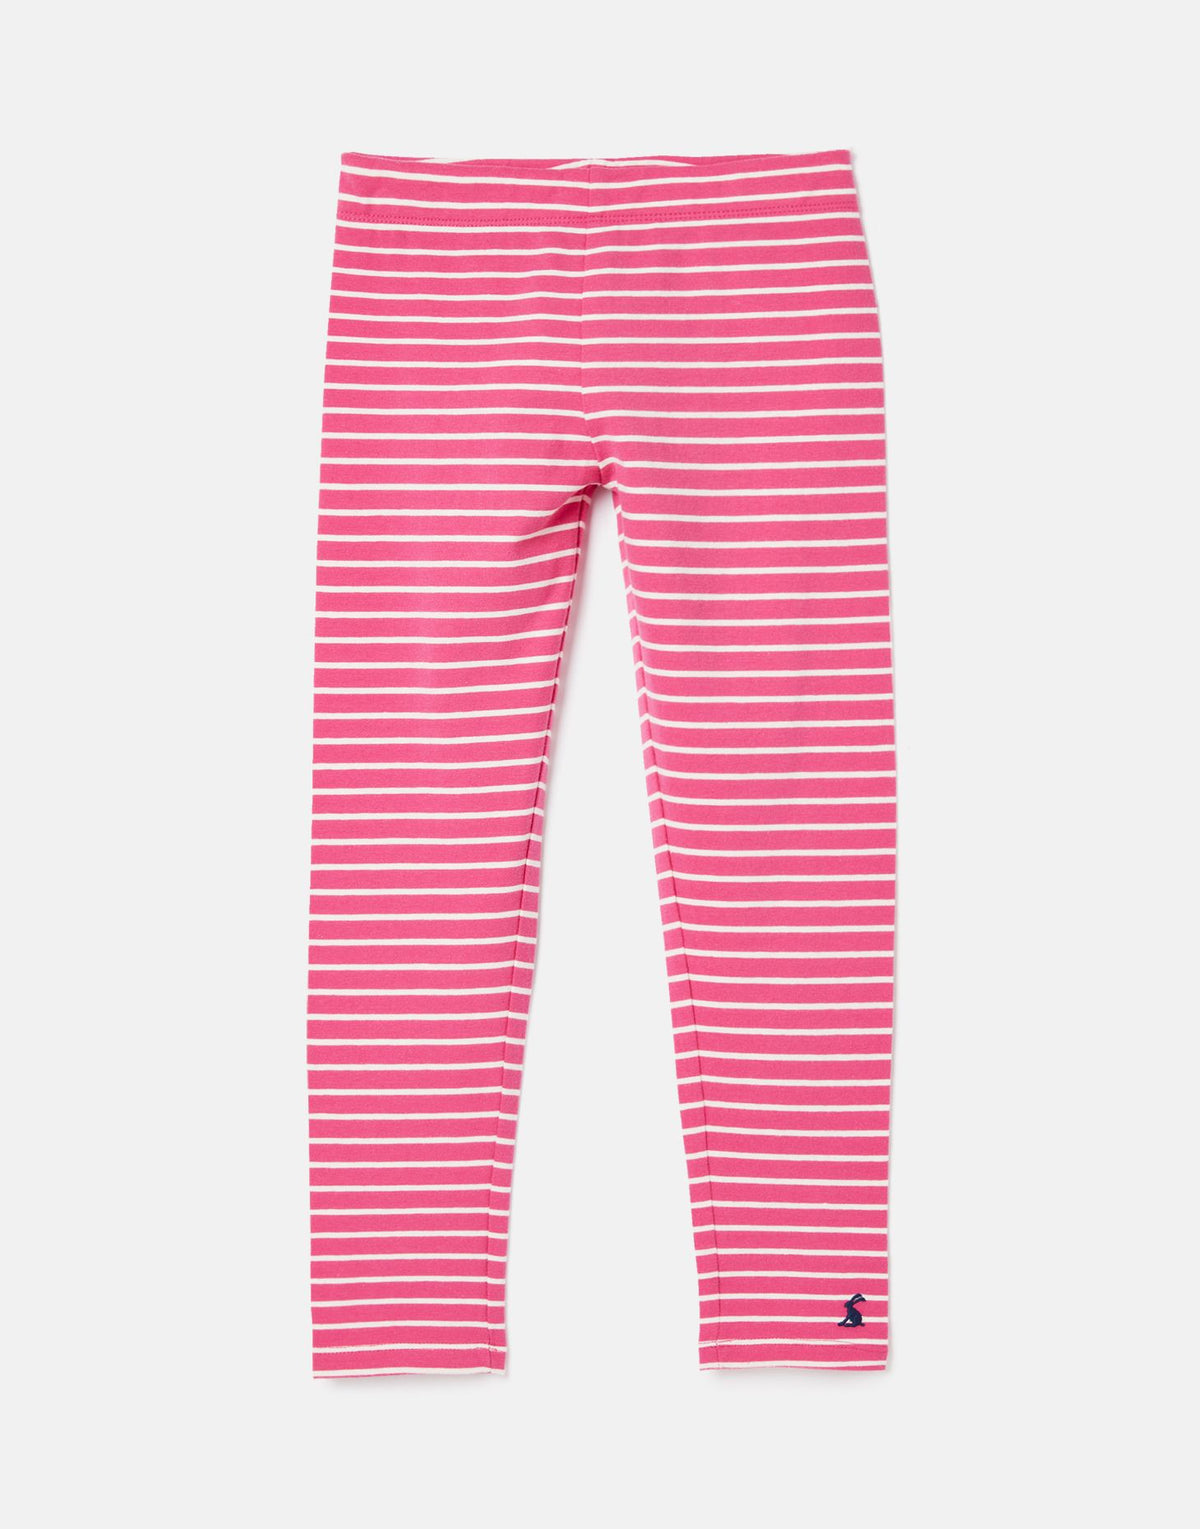 Joules Emilia Legging - Pink Stripe